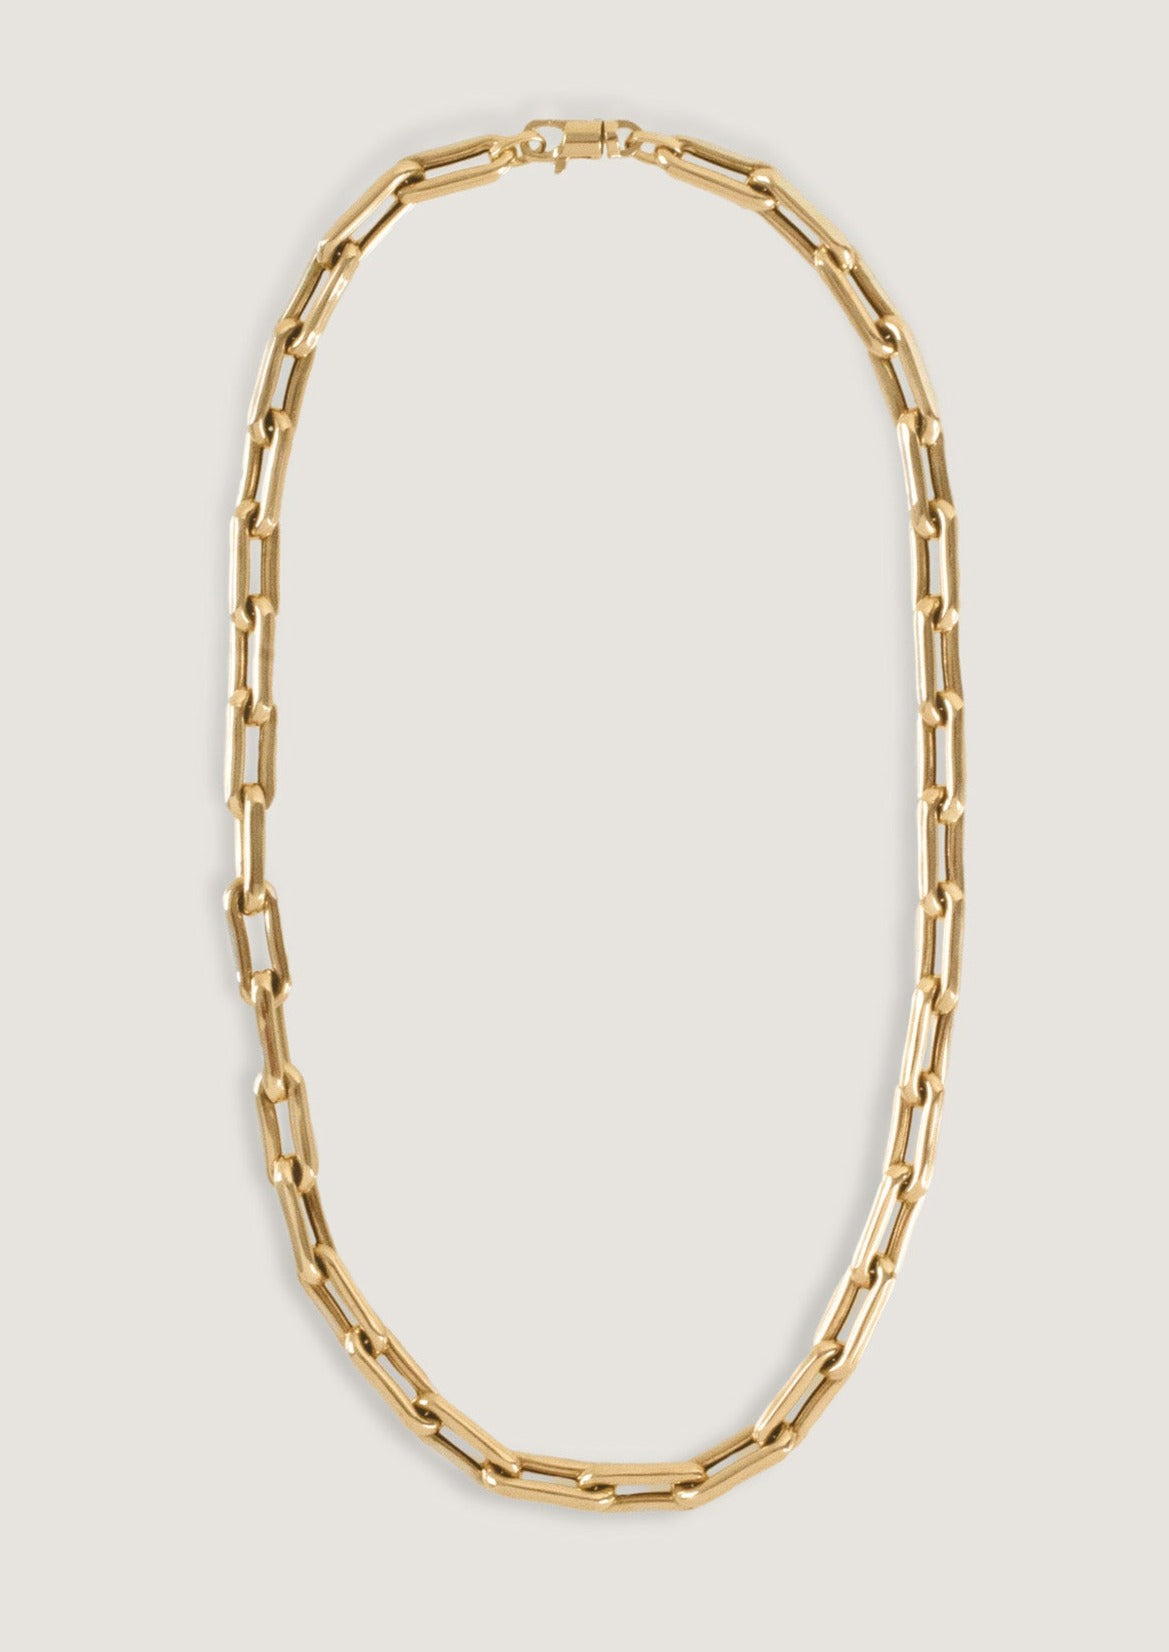 alt="Rome Bold Link Chain Necklace"